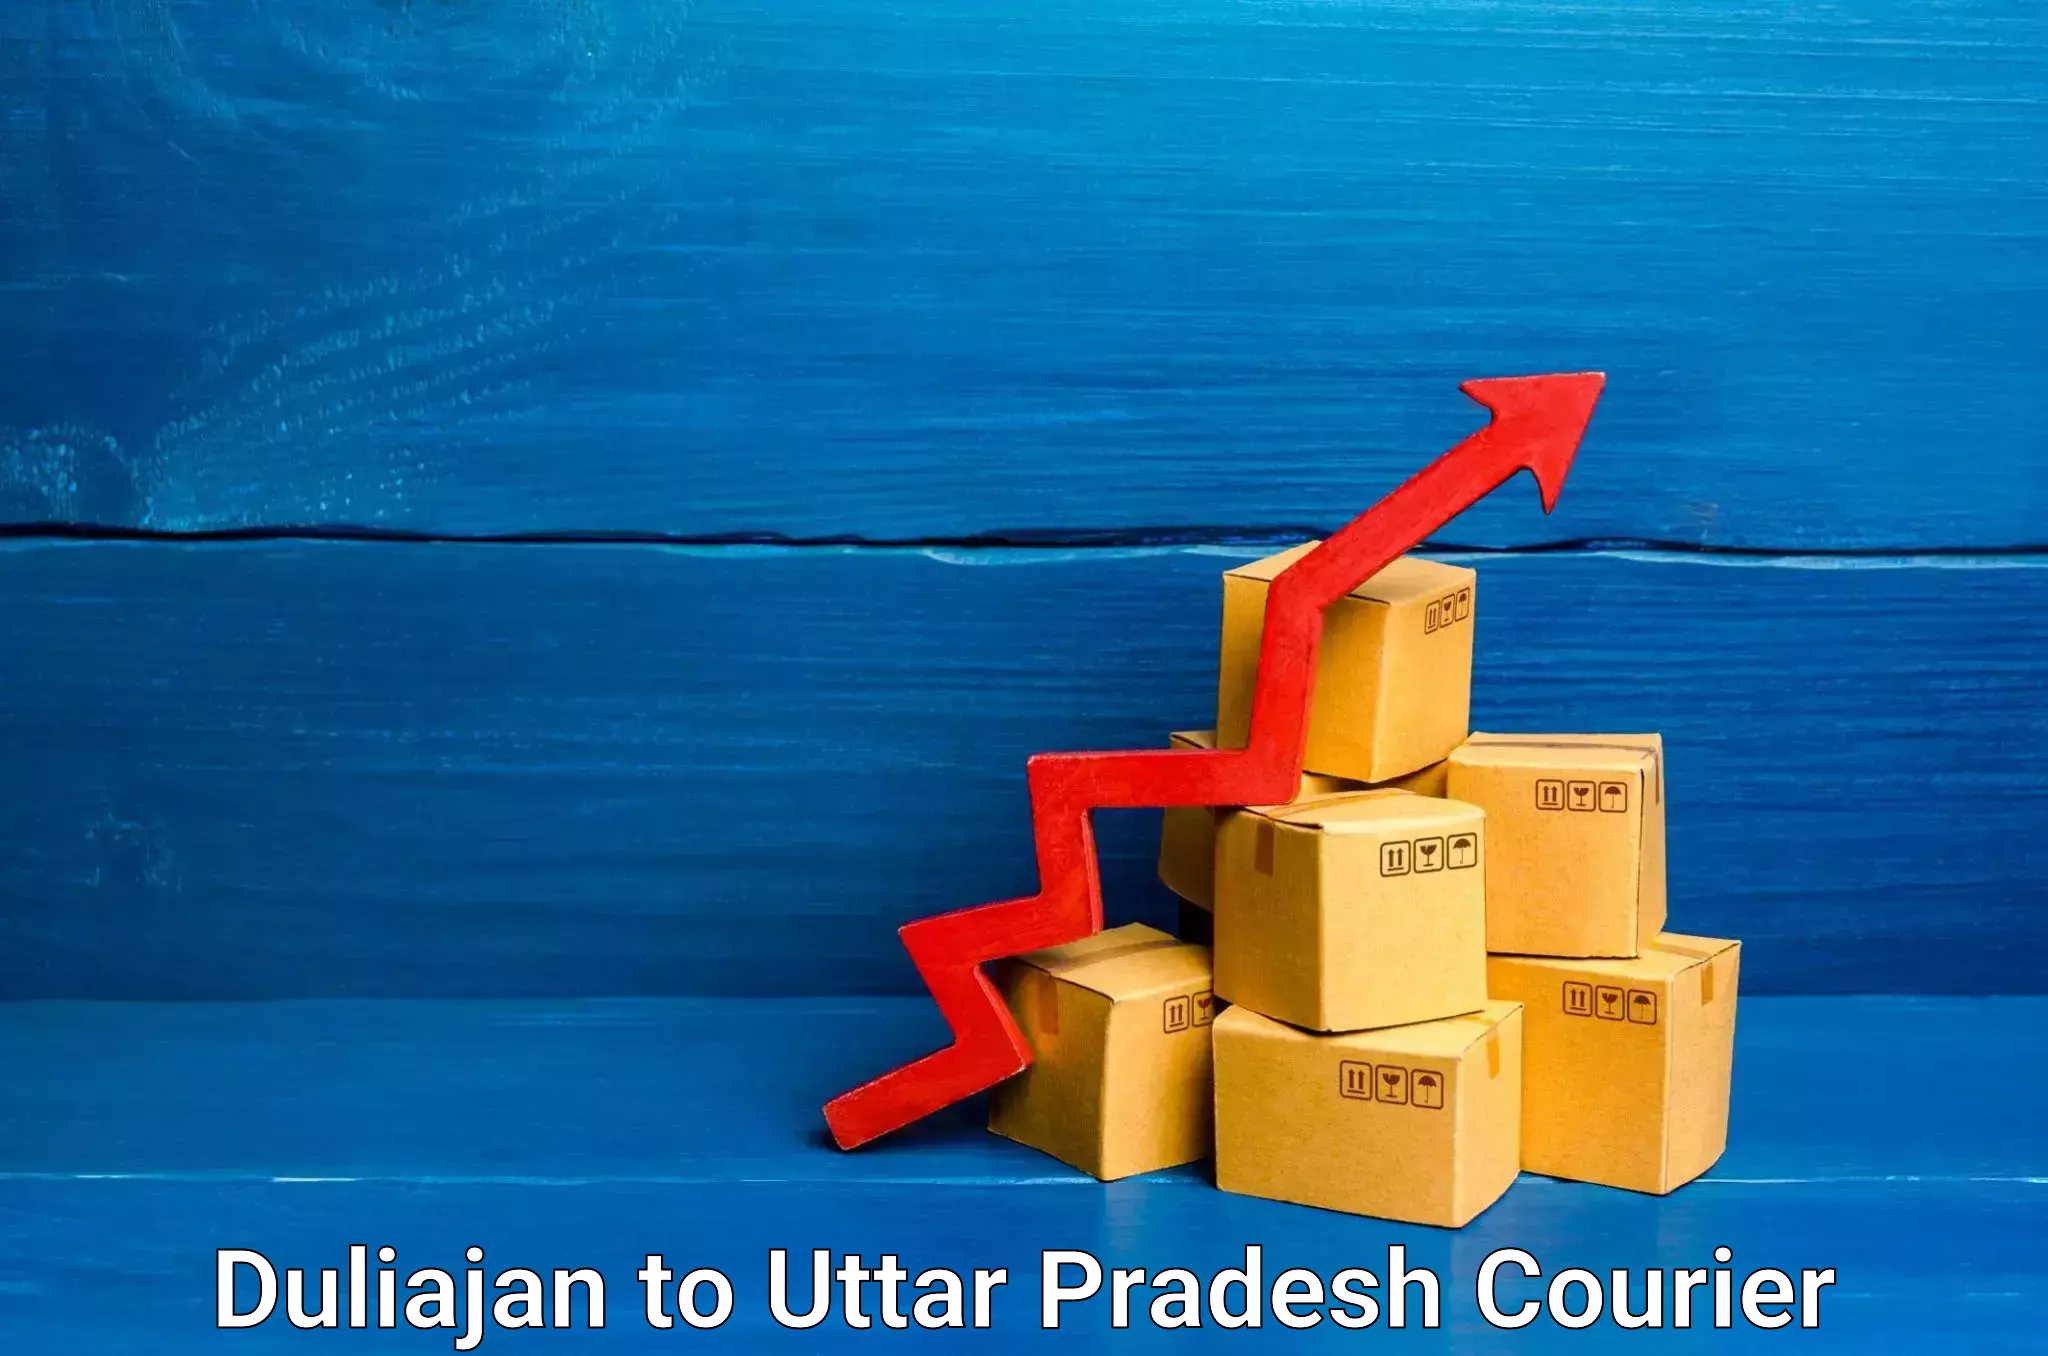 Courier service innovation Duliajan to Uttar Pradesh